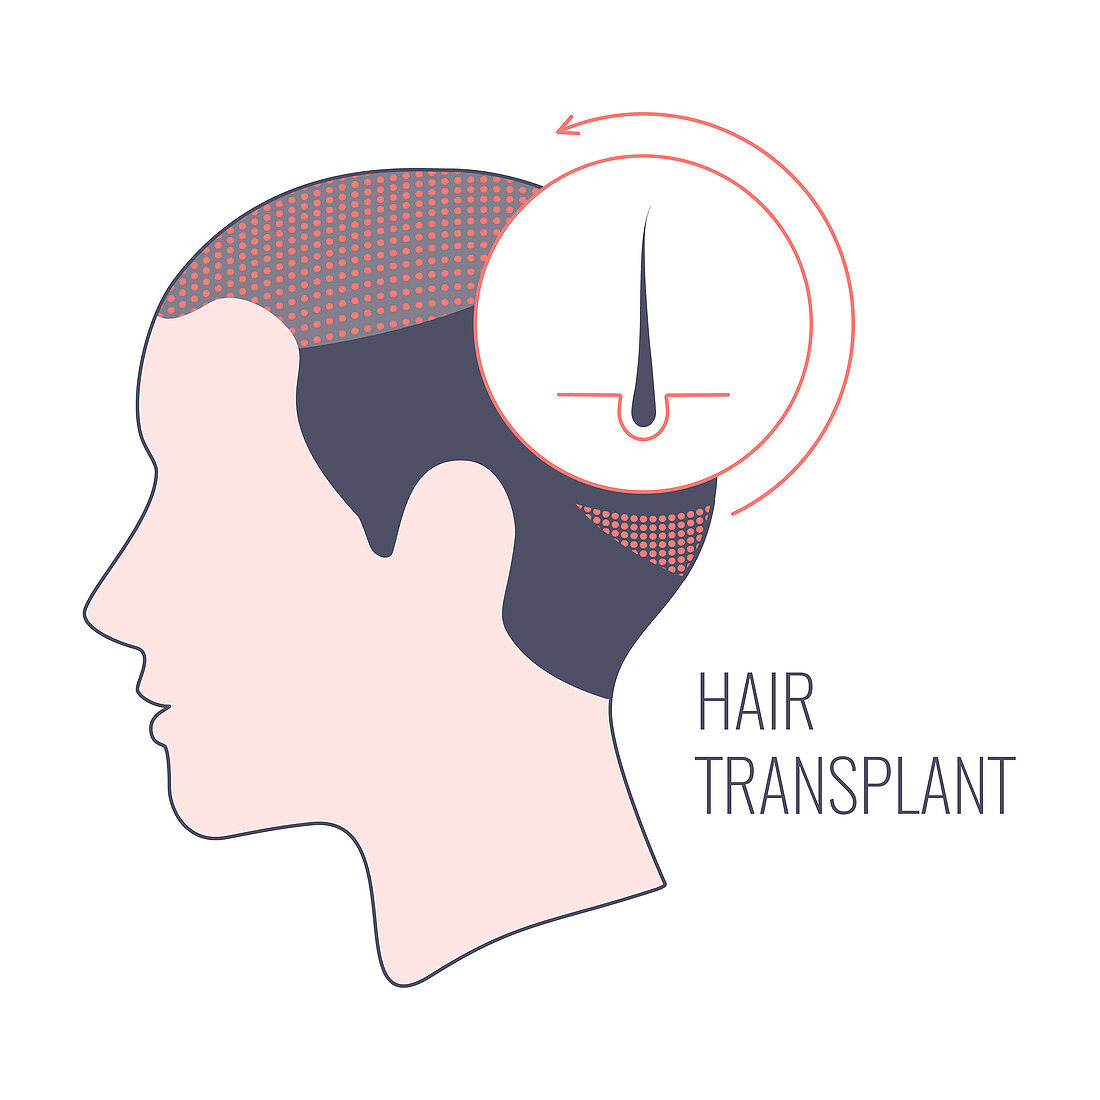 Hair transplantation in women, conceptual illustration